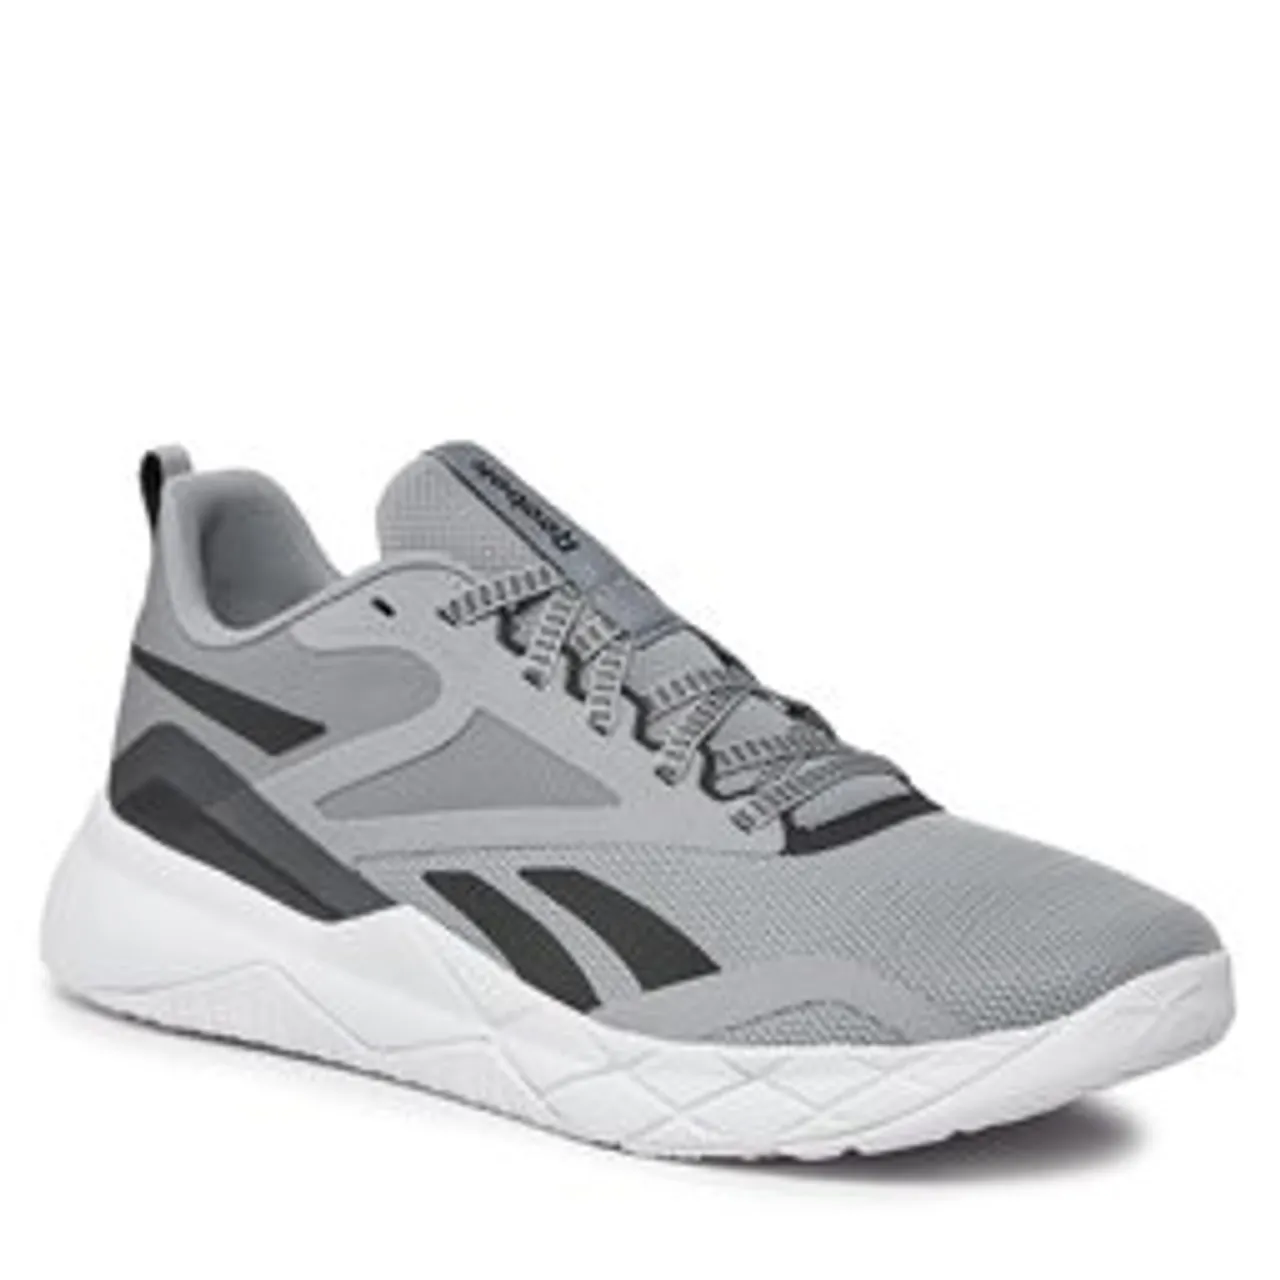 Schuhe Reebok Nfx Trainer ID5031 Grey